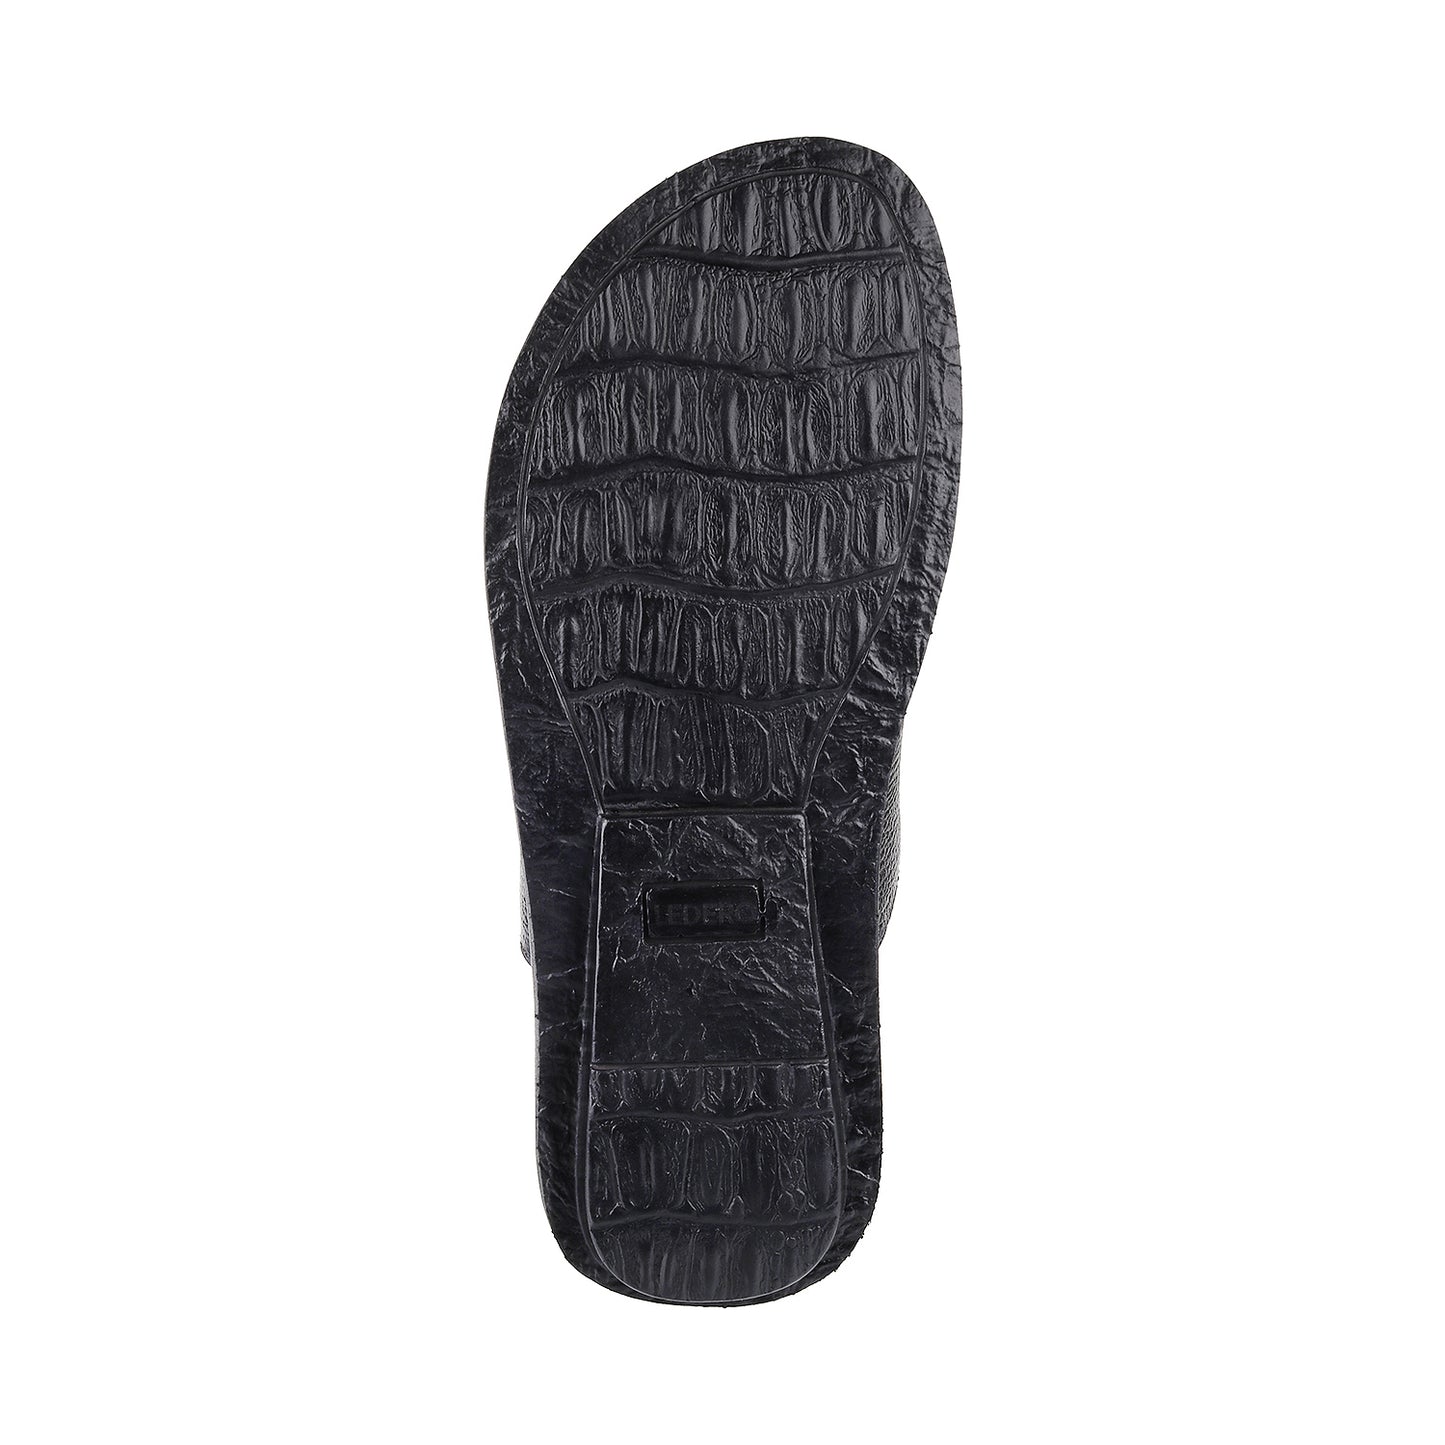 ledero article no 12-113 men black leather sandal flipflop with stitch detail PU sole - bottom view